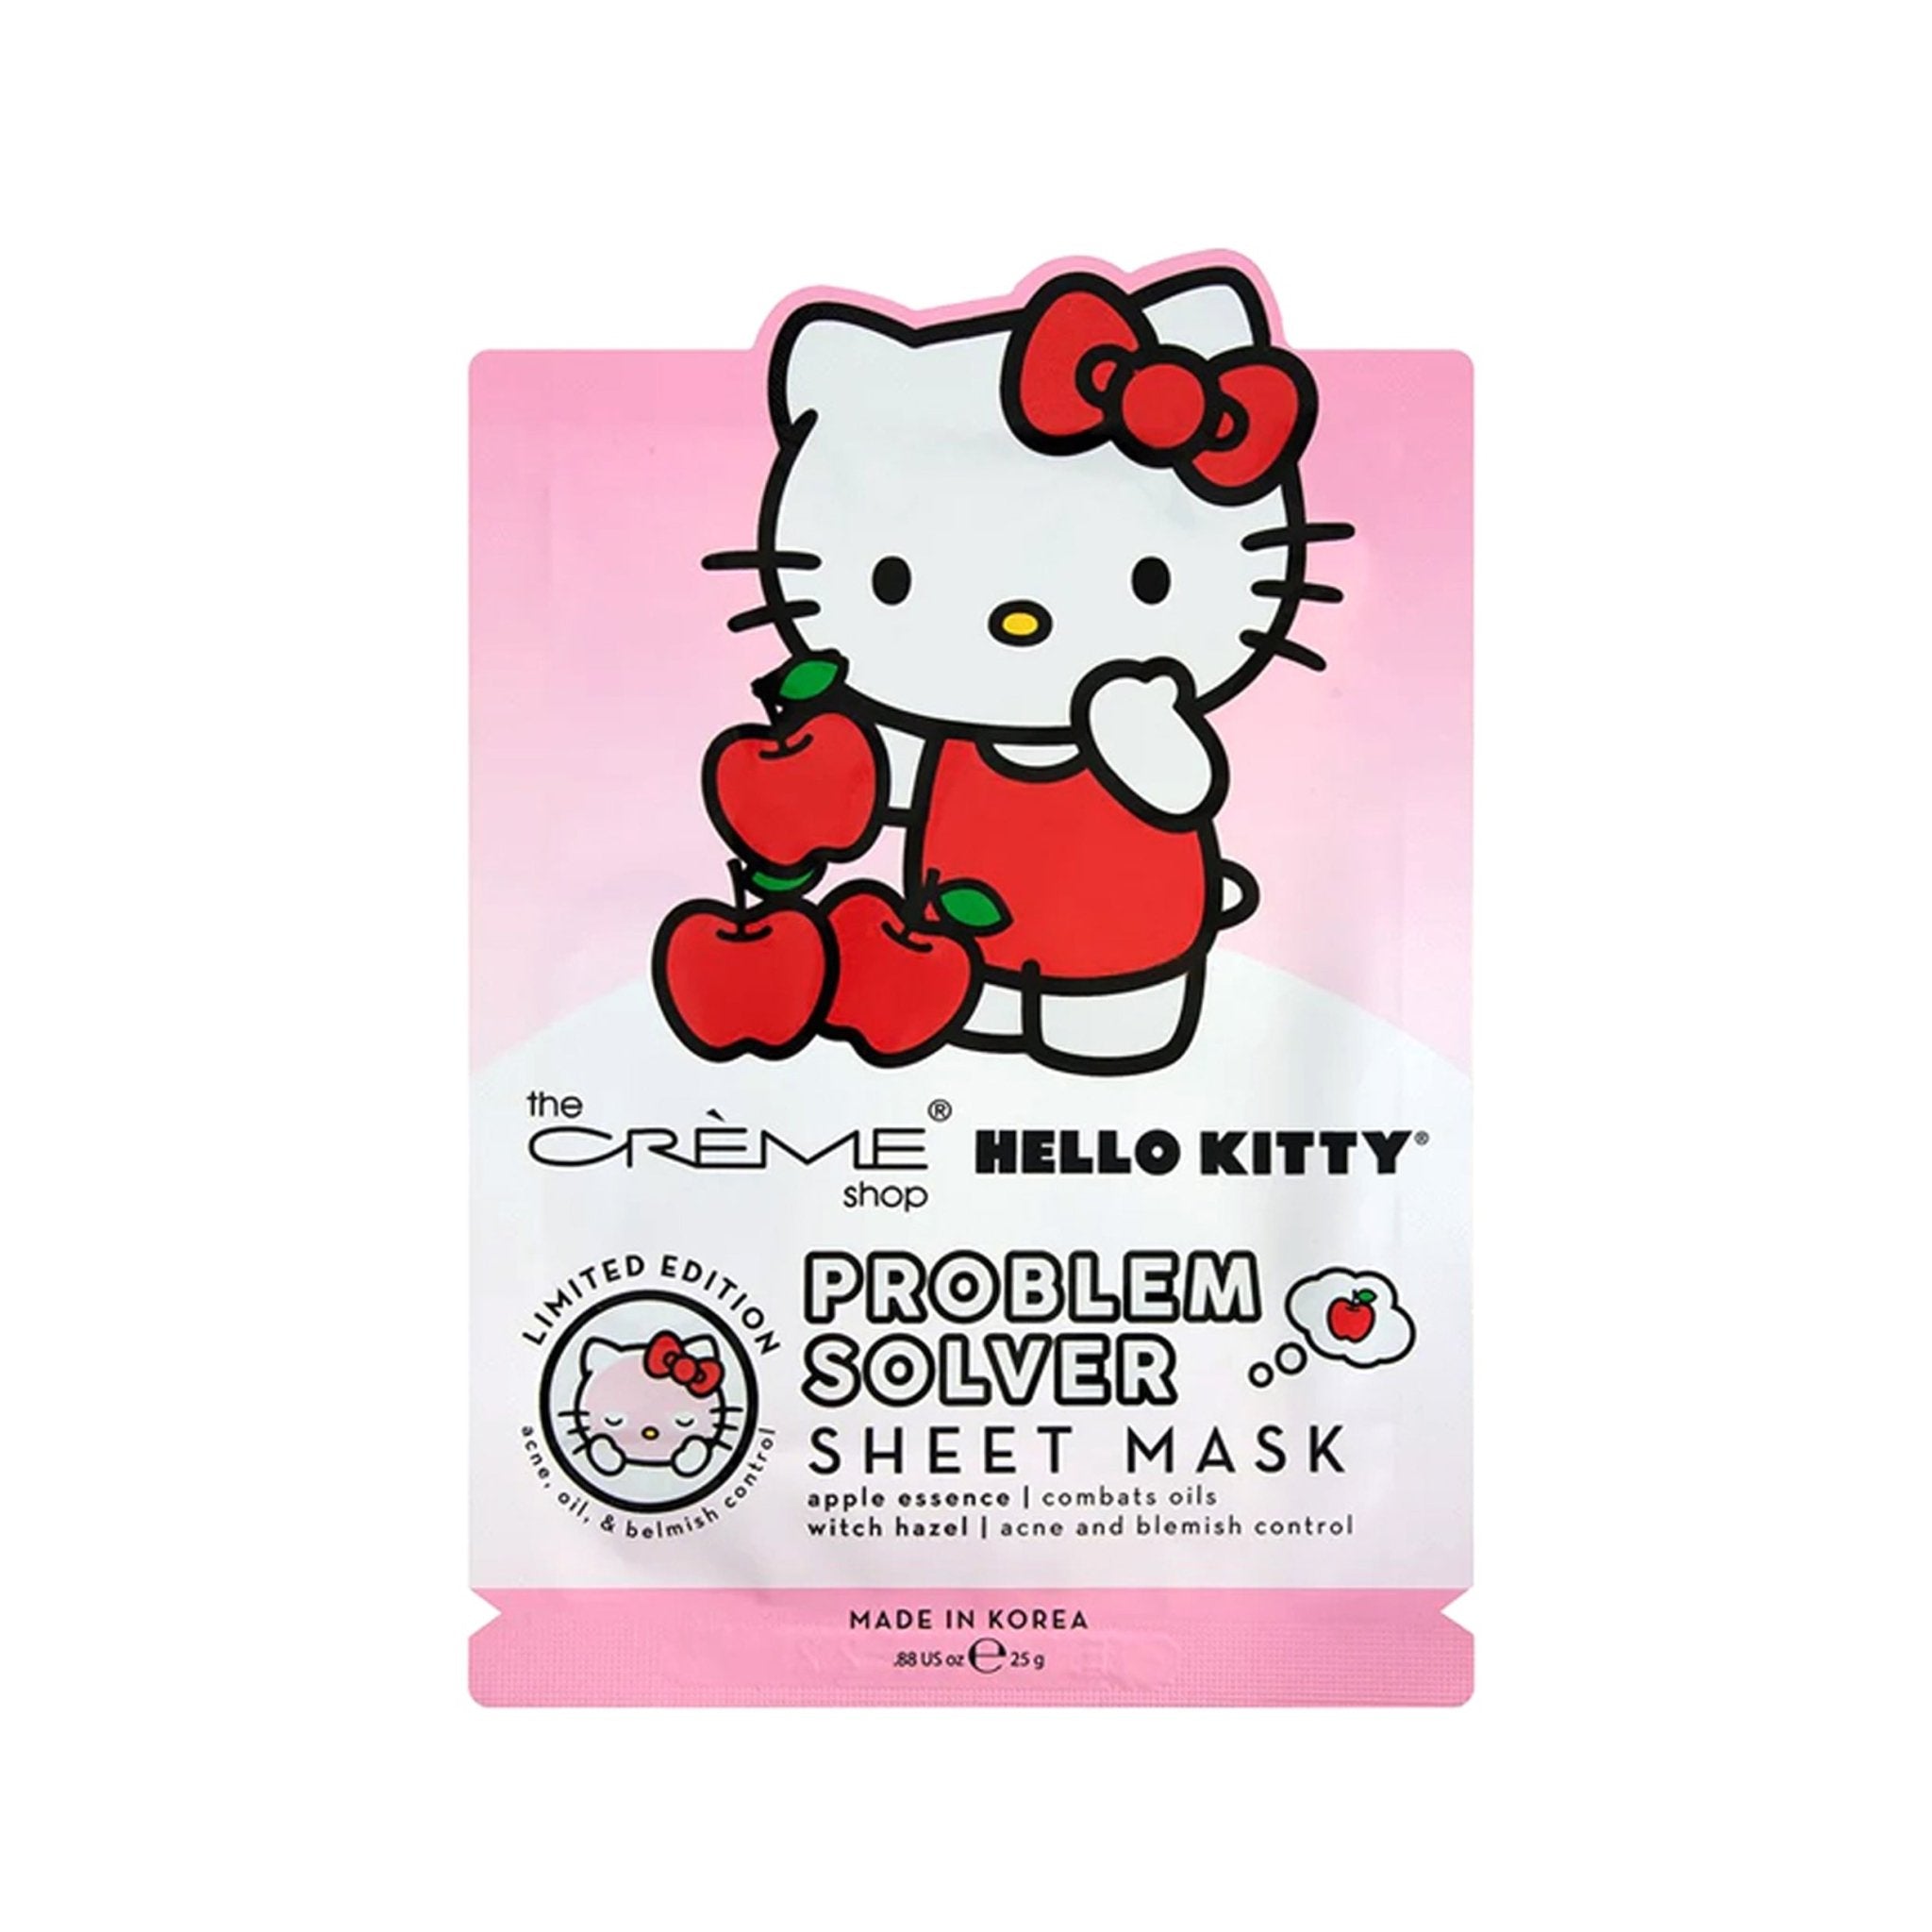 Creme Shop x Hello Kitty DEPUFFING GEL EYE MASKS Reusable - New